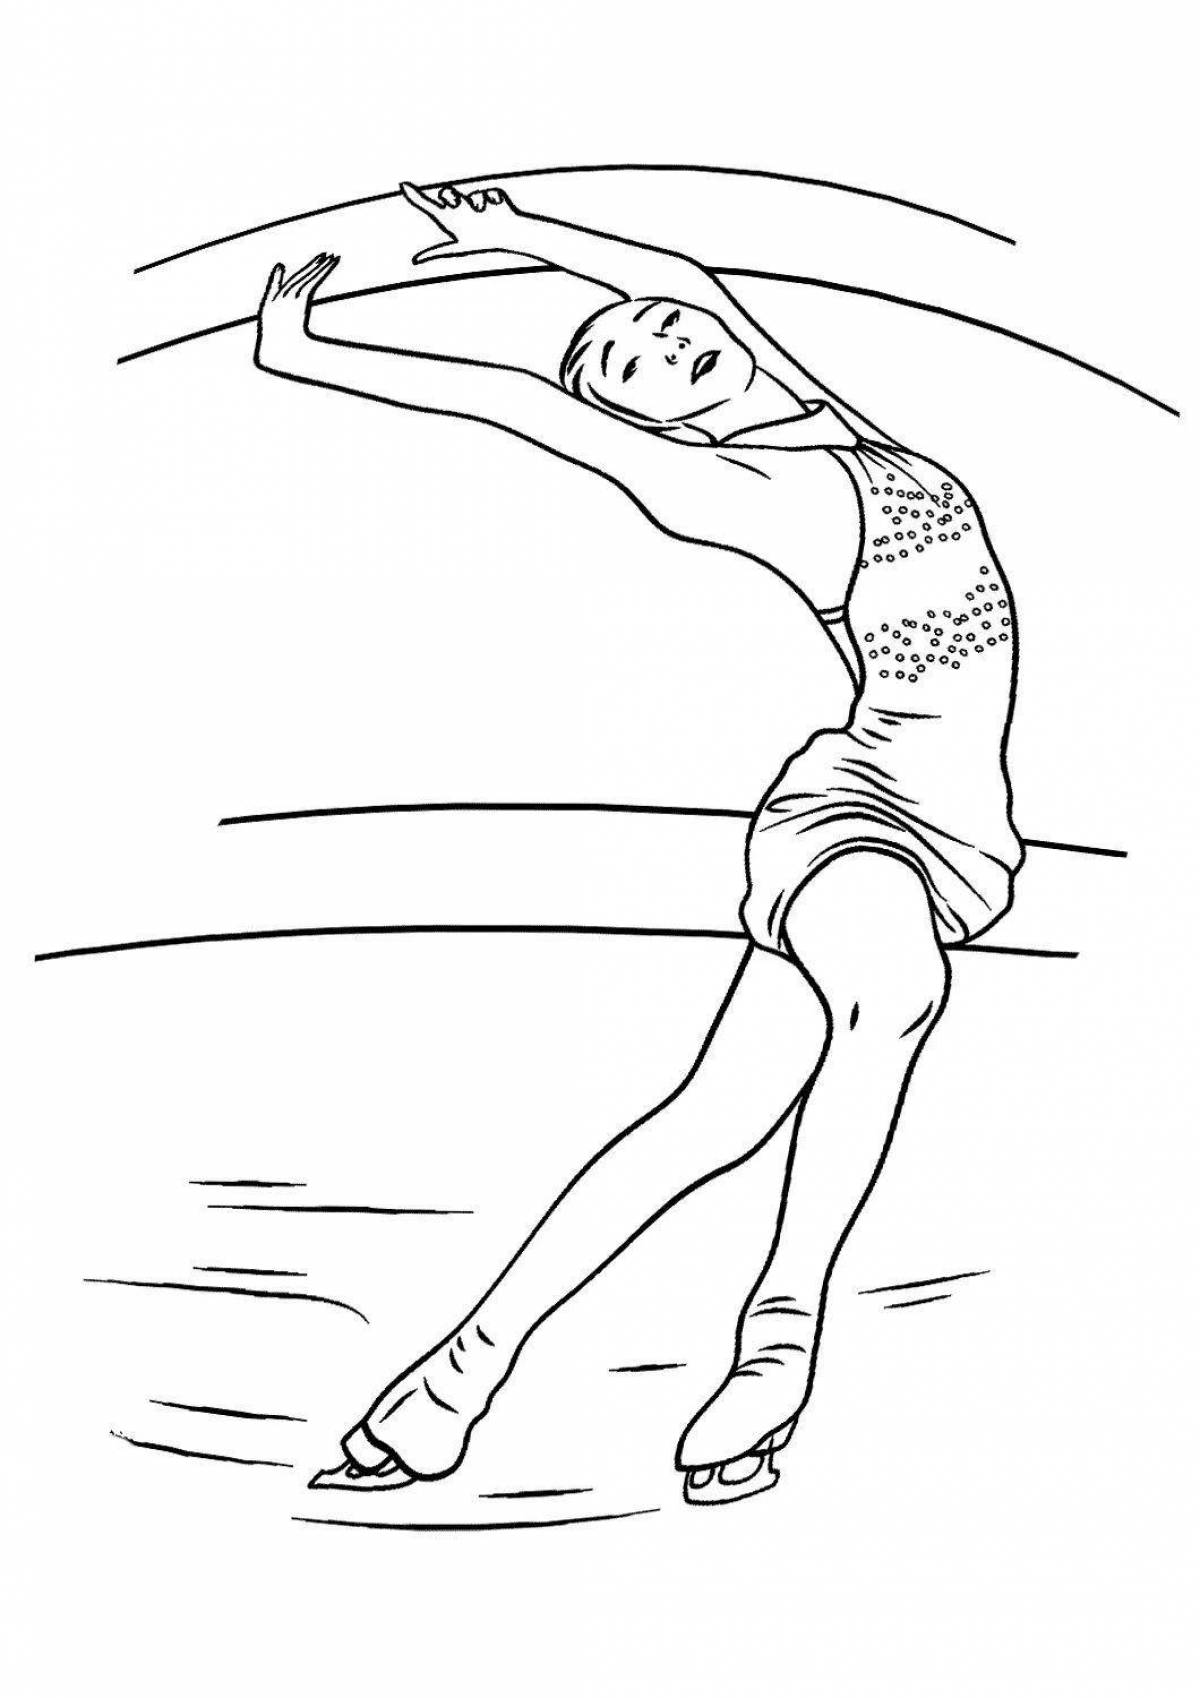 Radiant coloring page girl figure skater